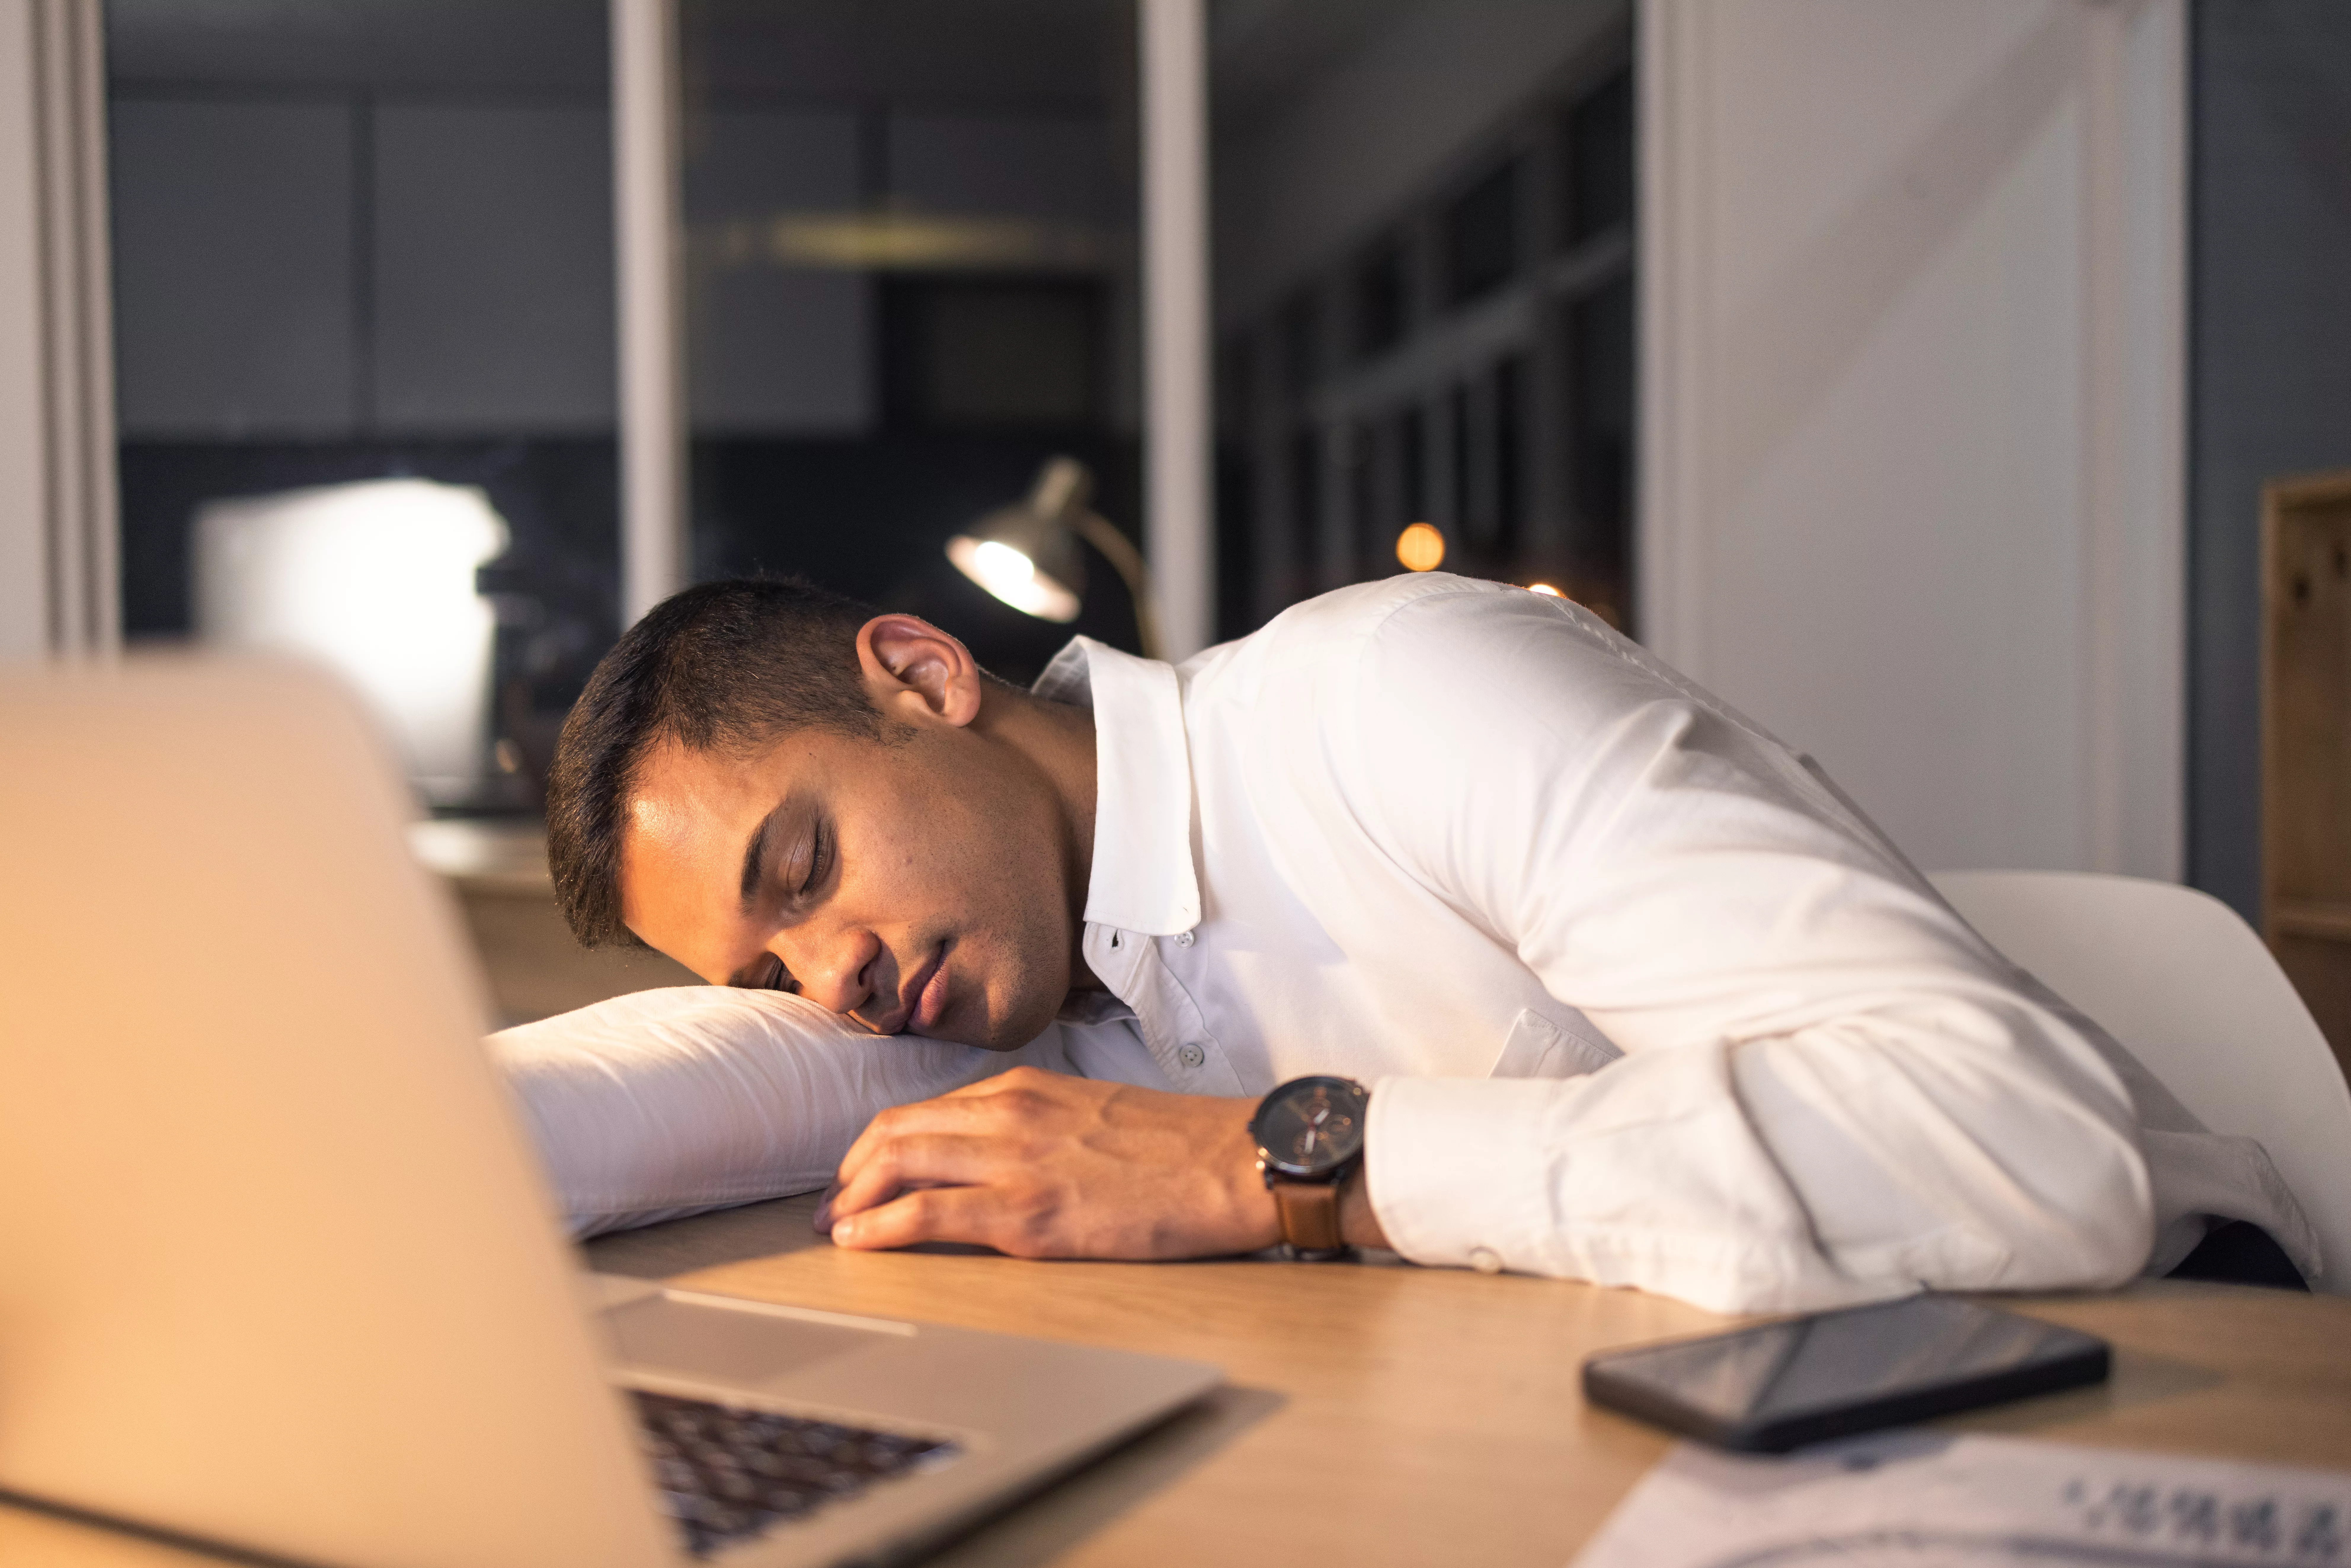 work-fatigue-business-man-and-sleeping-office-emp-2022-12-29-20-11-12-utc